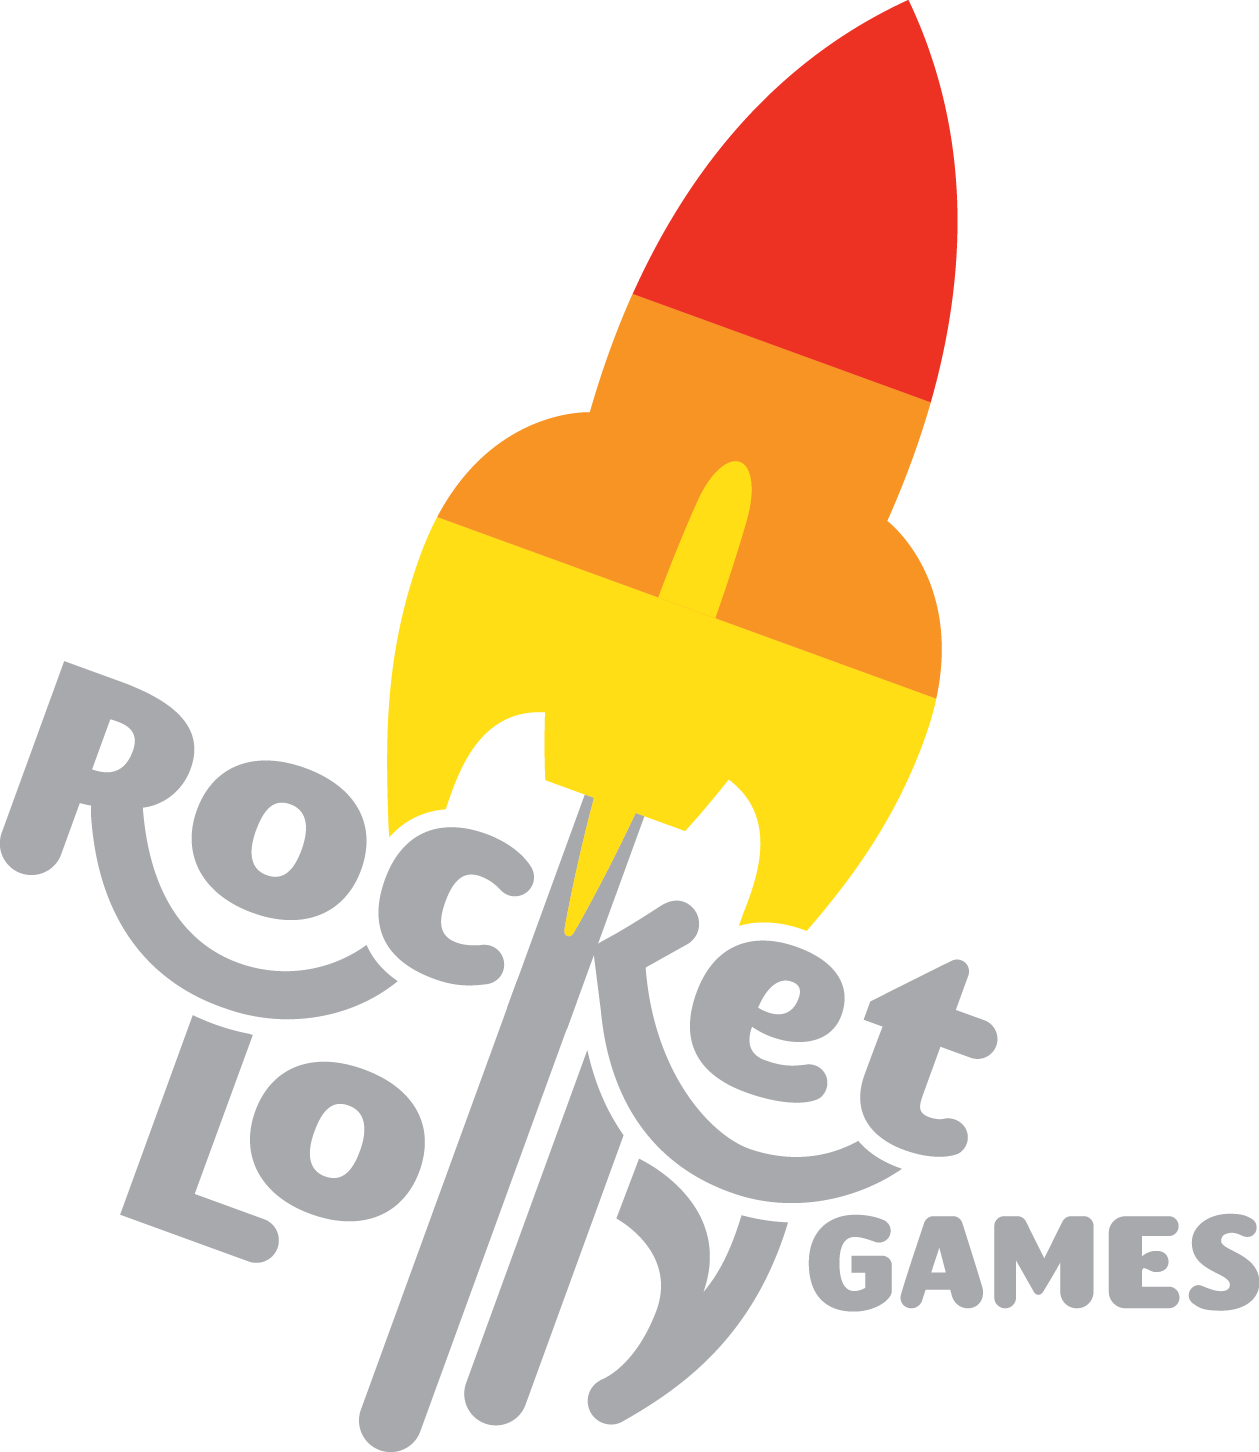 Games logo. Clipart rocket lolly